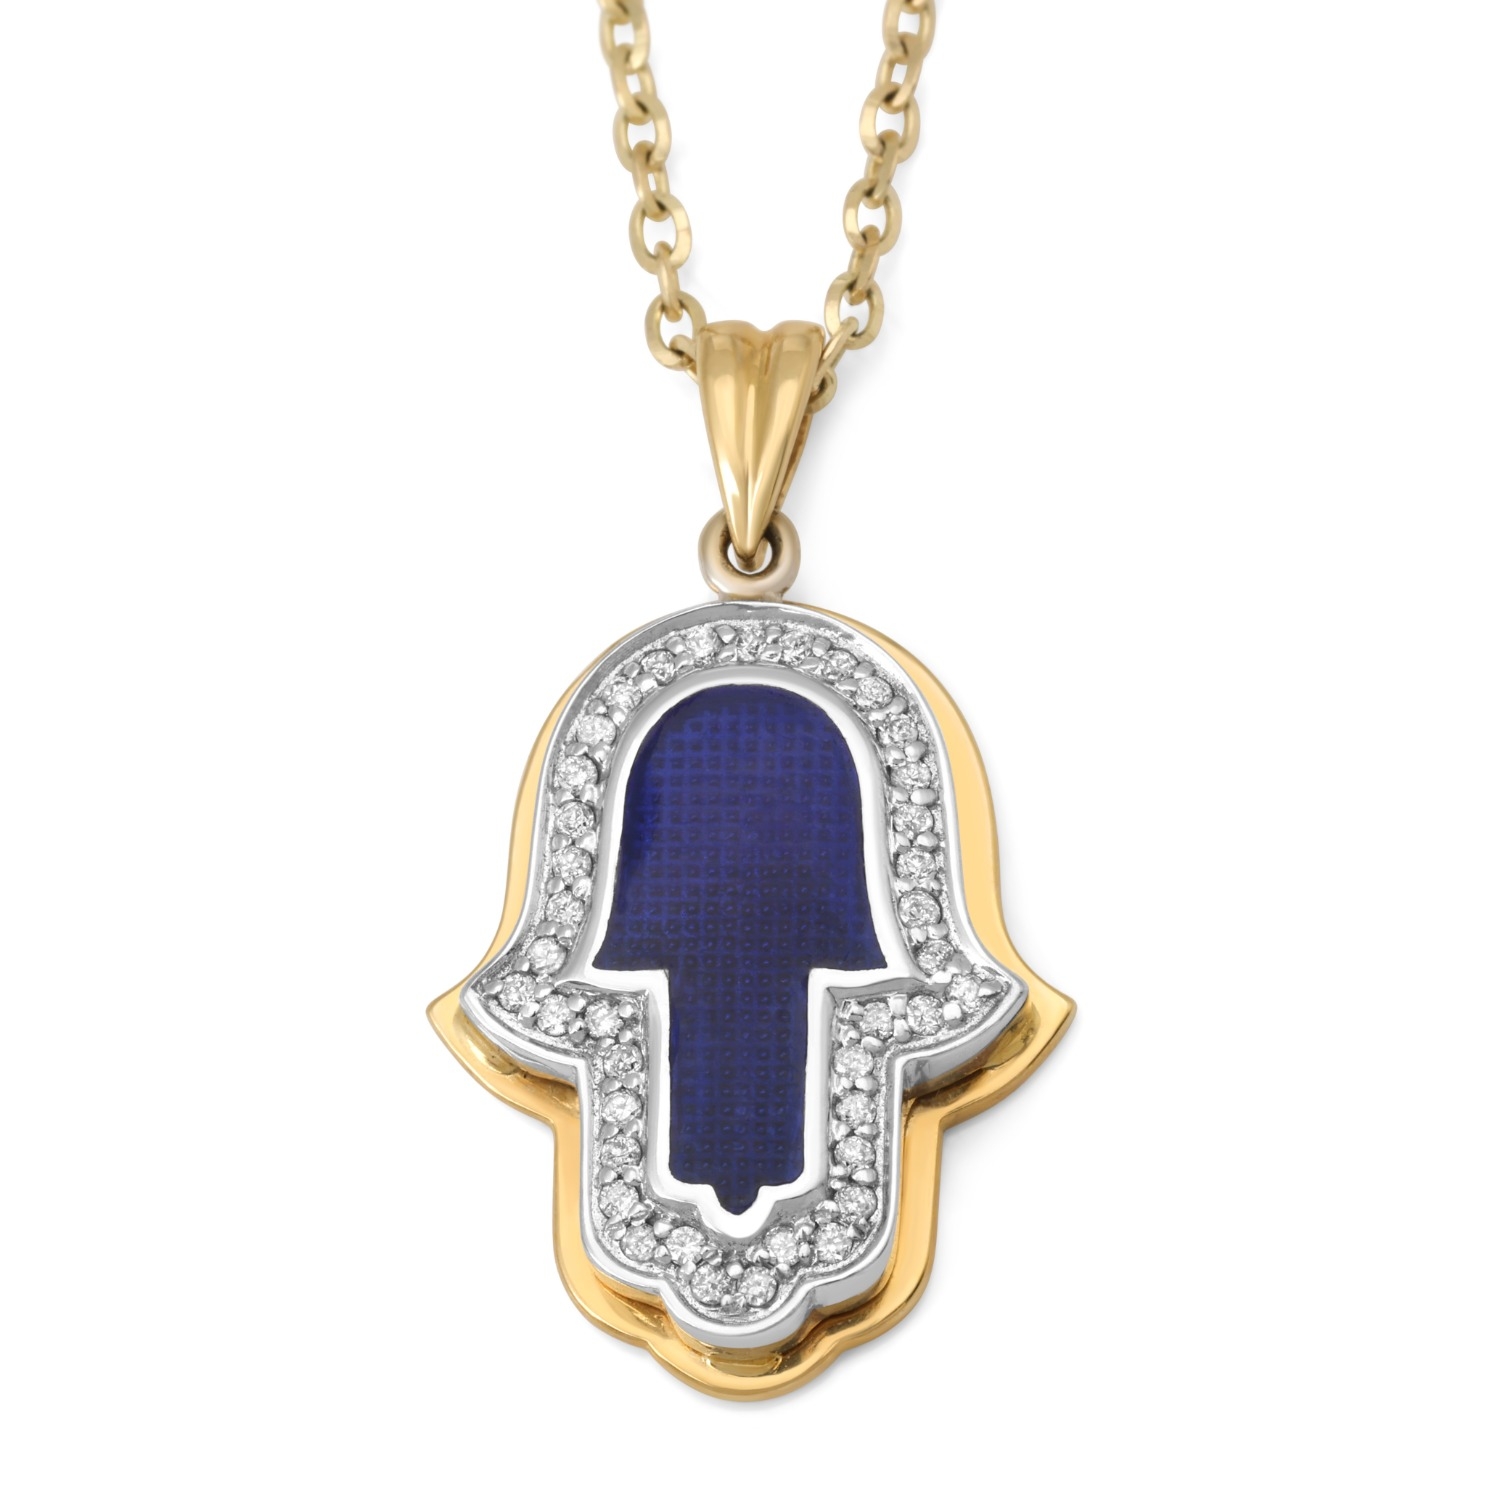 Anbinder Jewelry 14K Gold Hamsa Diamond Pendant with Blue Enamel - 1